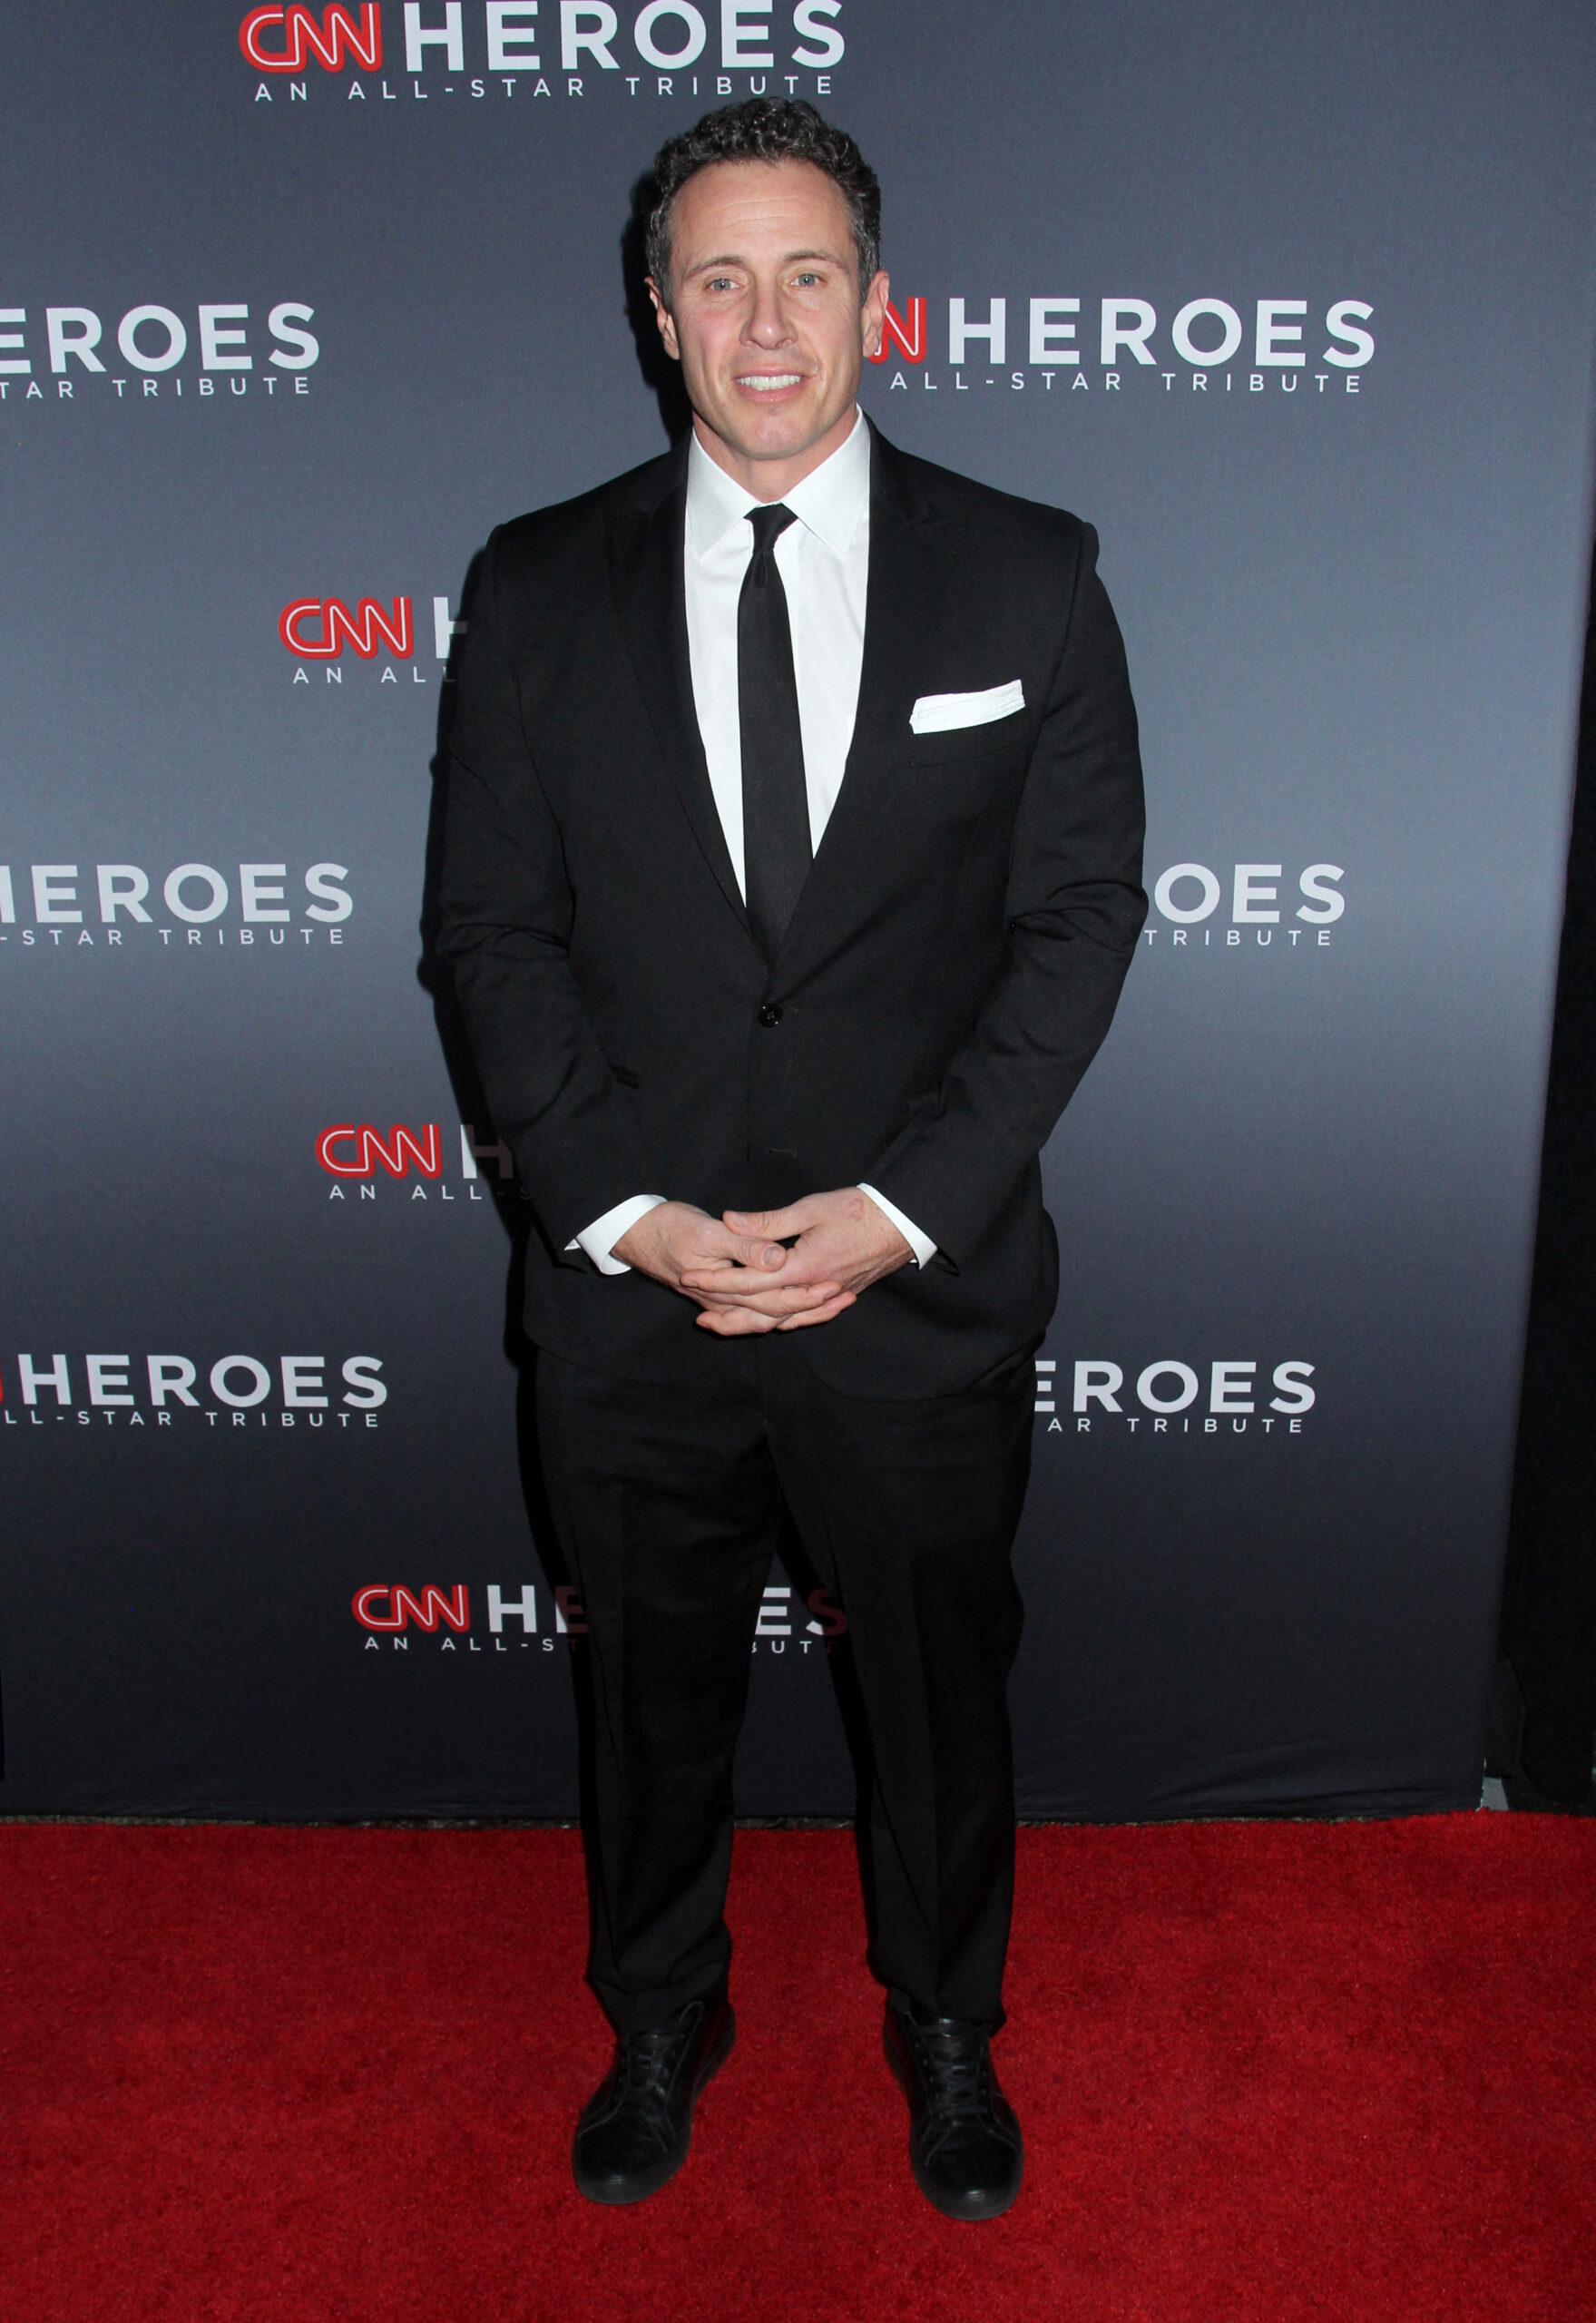 Chris Cuomo smiles in a black tuxedo